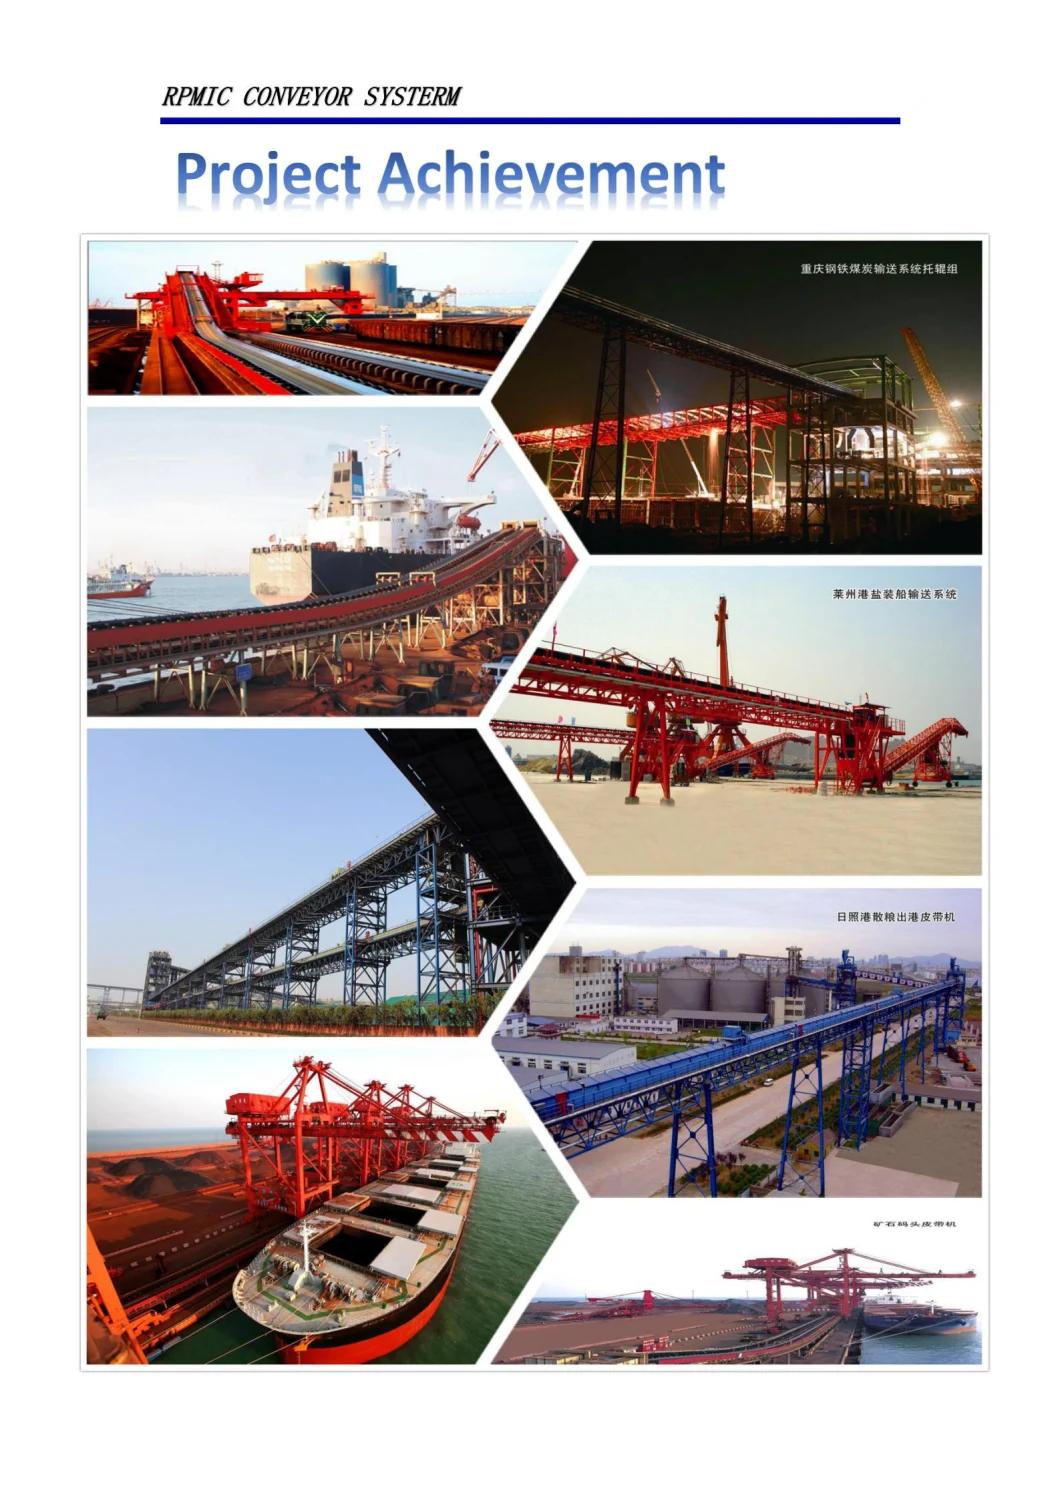 JIS/DIN Standard Trough Frame for Mining, Port, Cement Industries